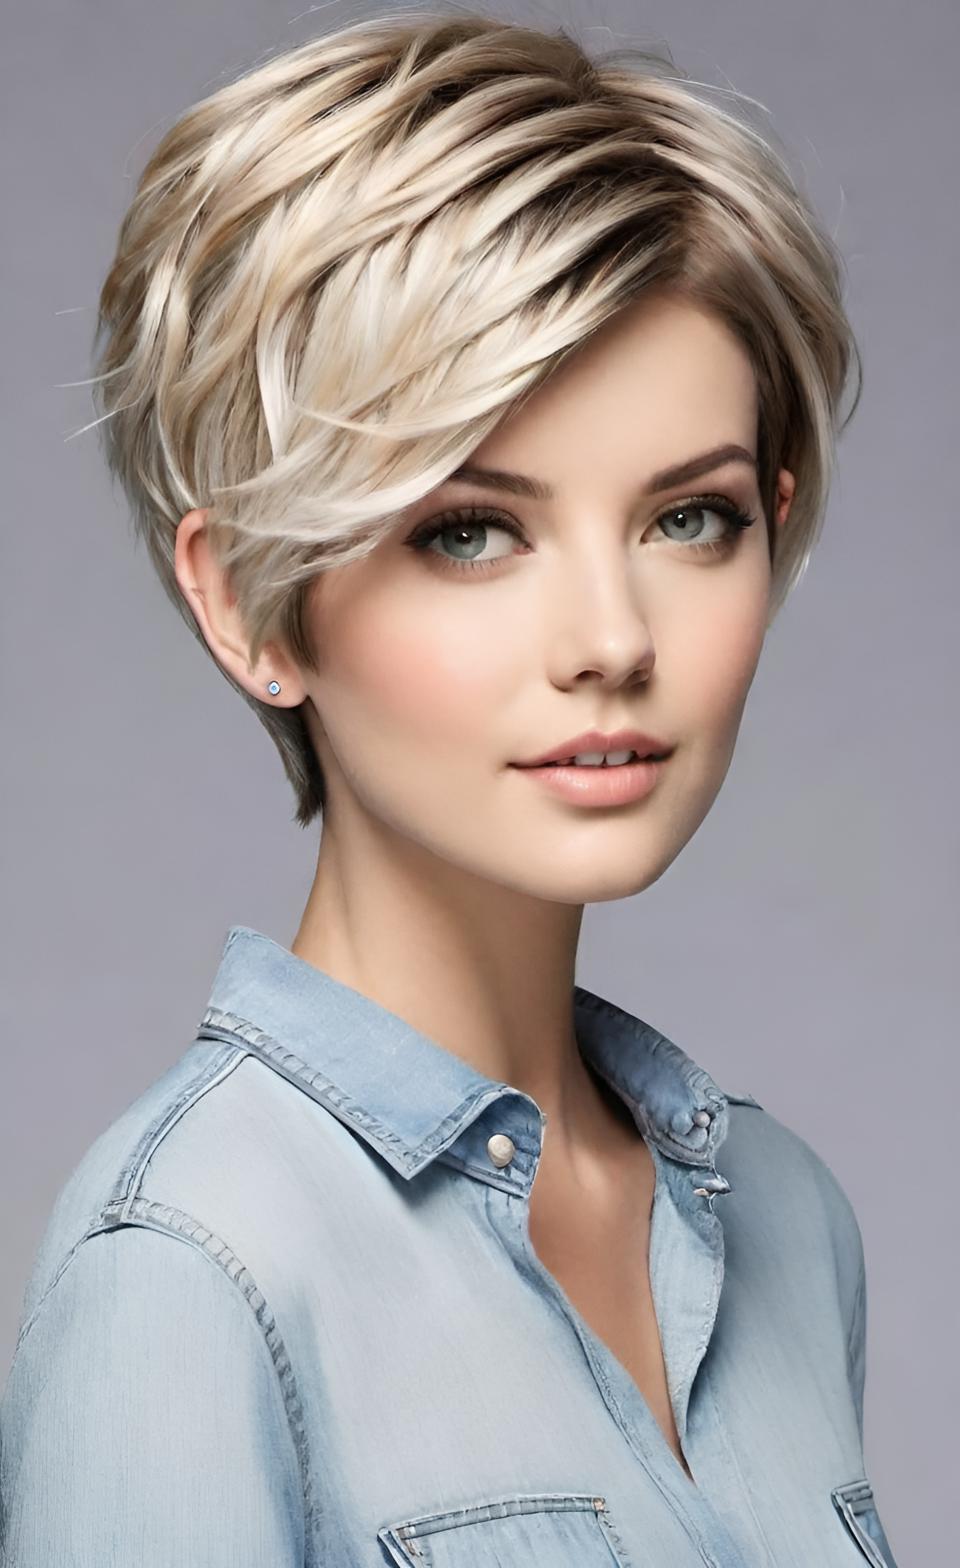 very beautifull short hair styling ideas